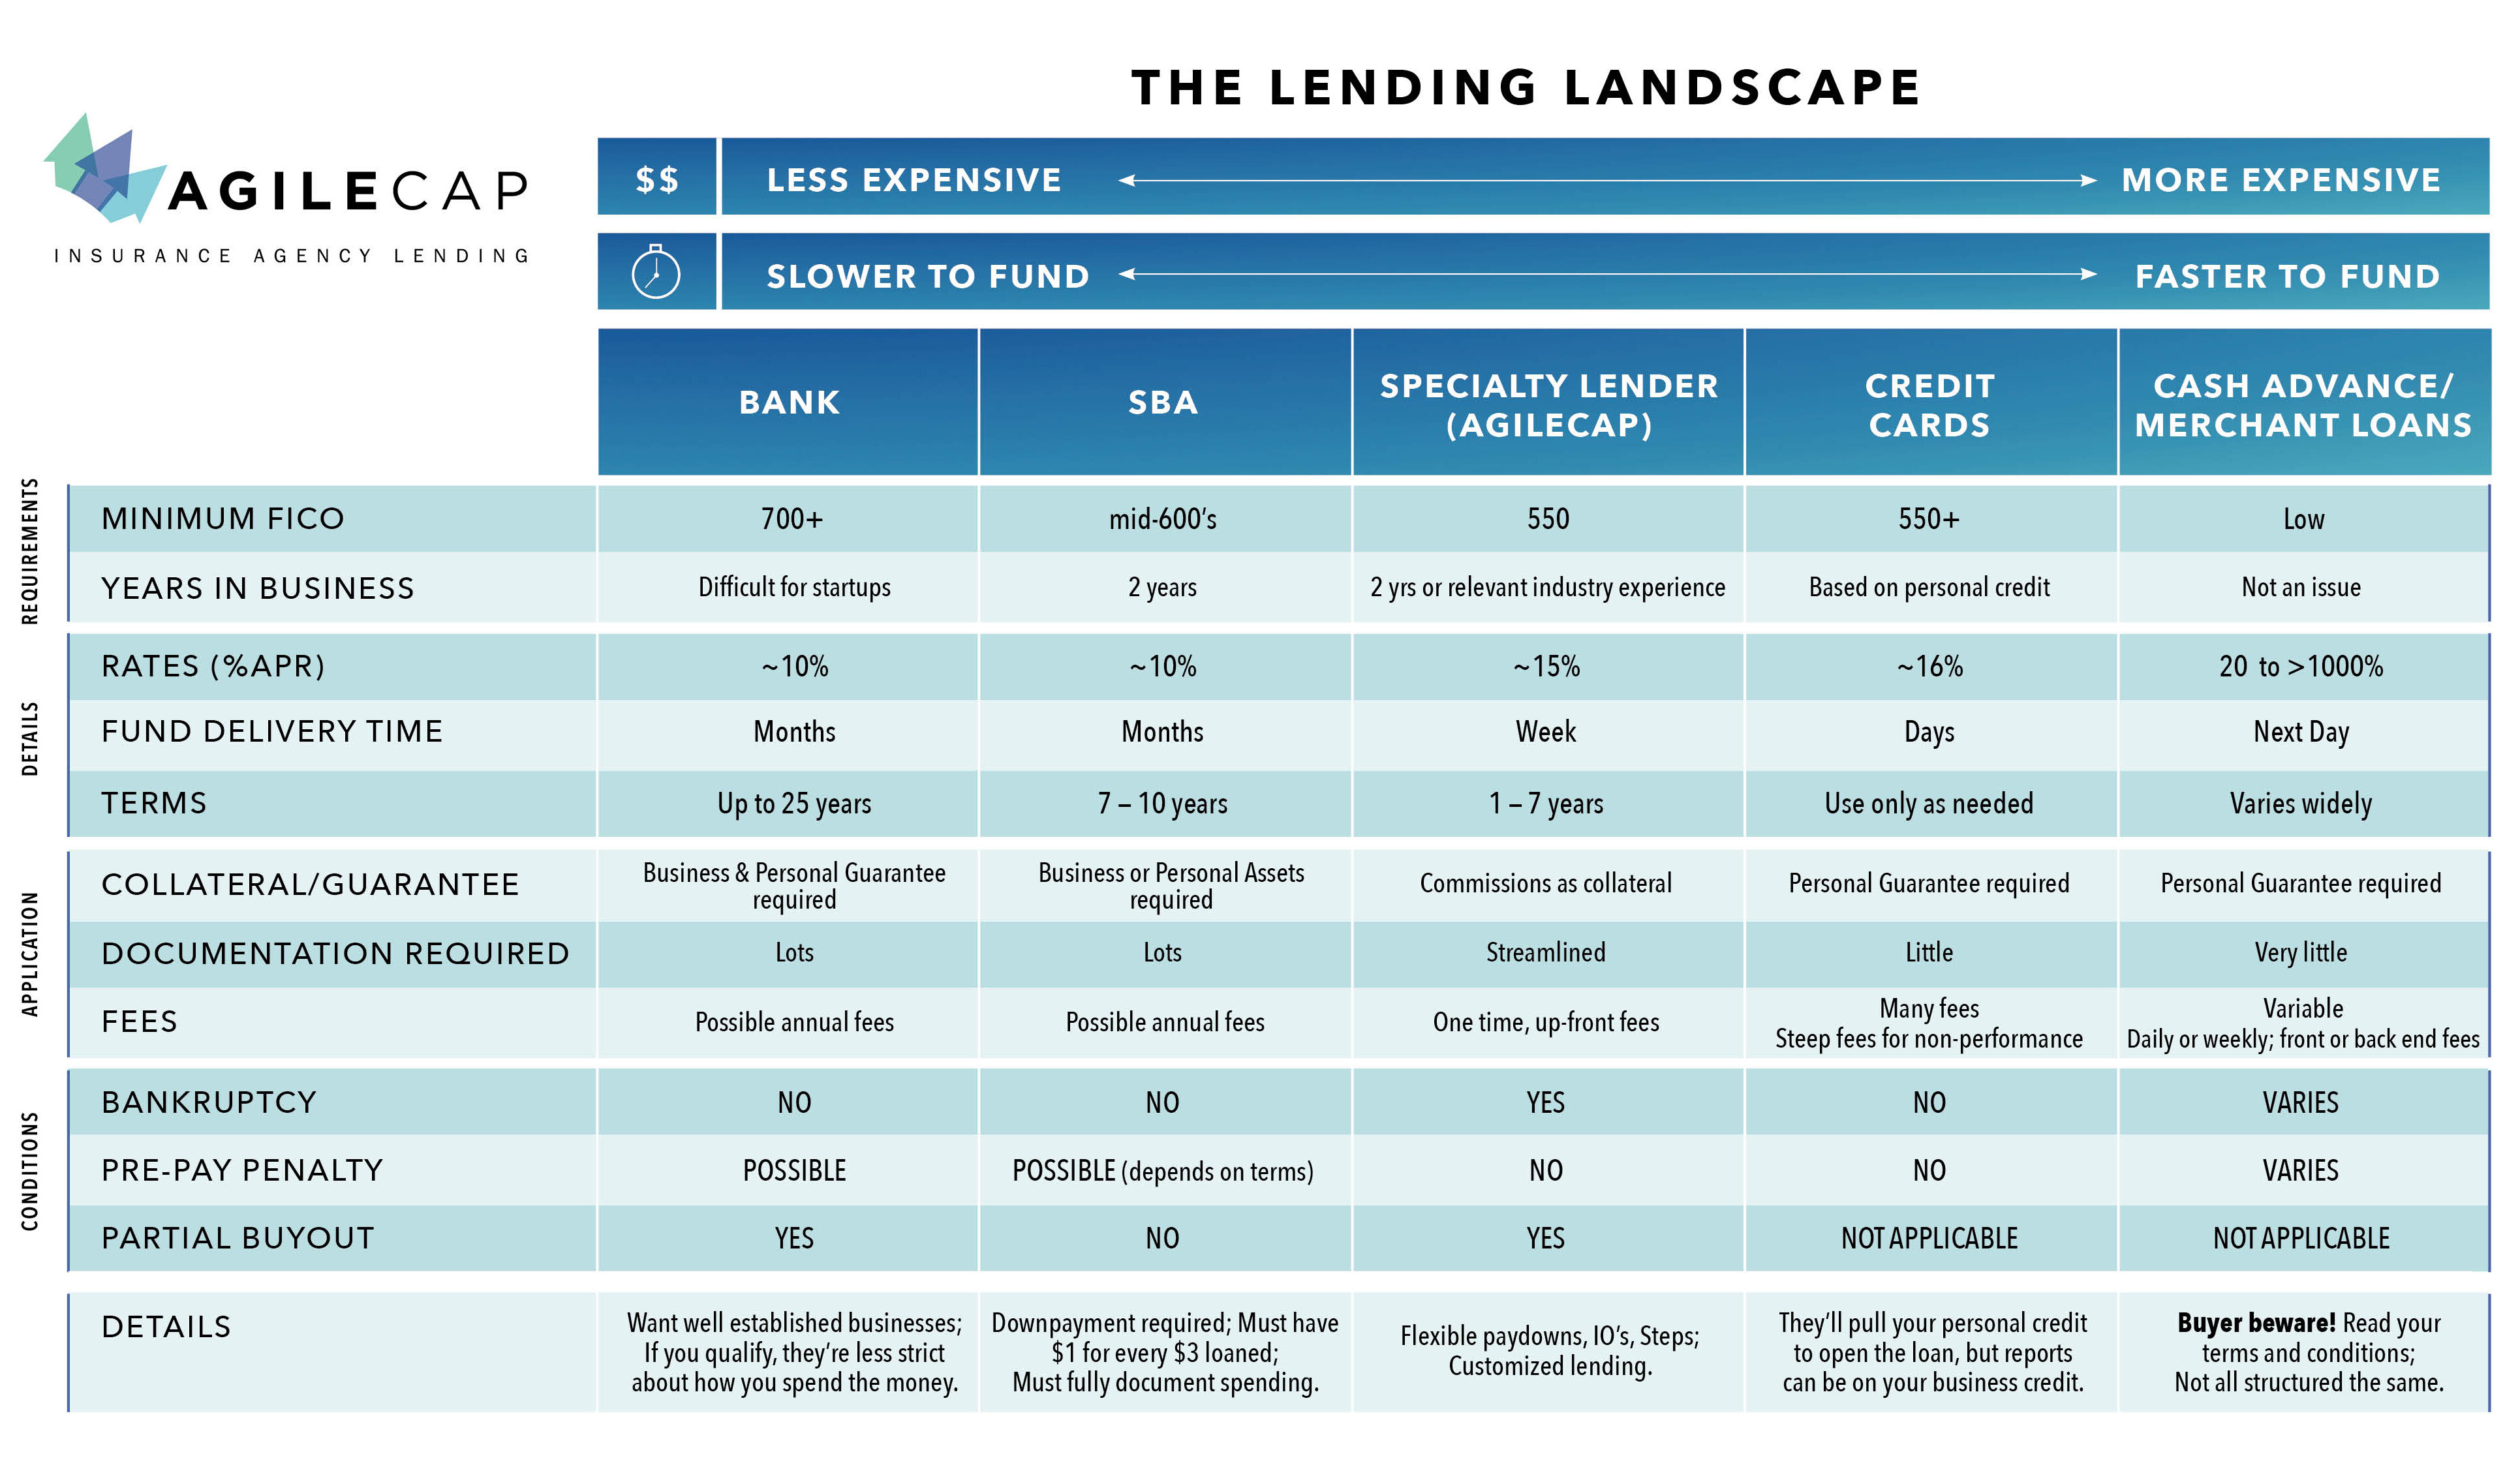 The lending landscape infographic chart